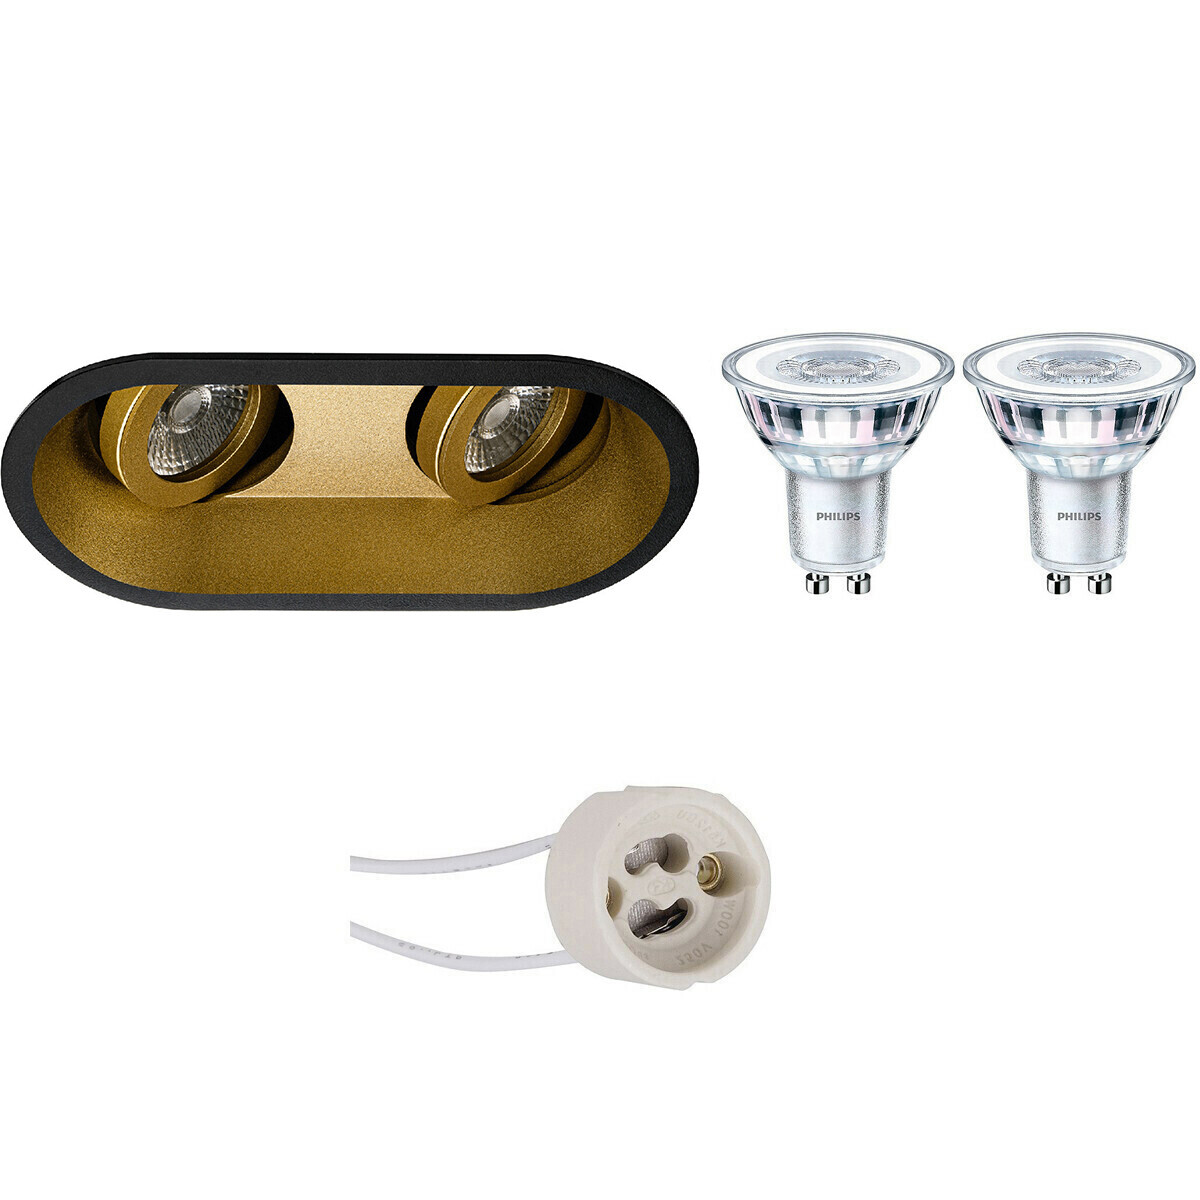 BES LED LED Spot Set - Pragmi Zano Pro - GU10 Fitting - Inbouw Ovaal Dubbel - Mat Zwart/Goud - Kantelbaar - 185x93mm - Philips - CorePro 830 36D - 4W - Warm Wit 3000K - Dimbaar